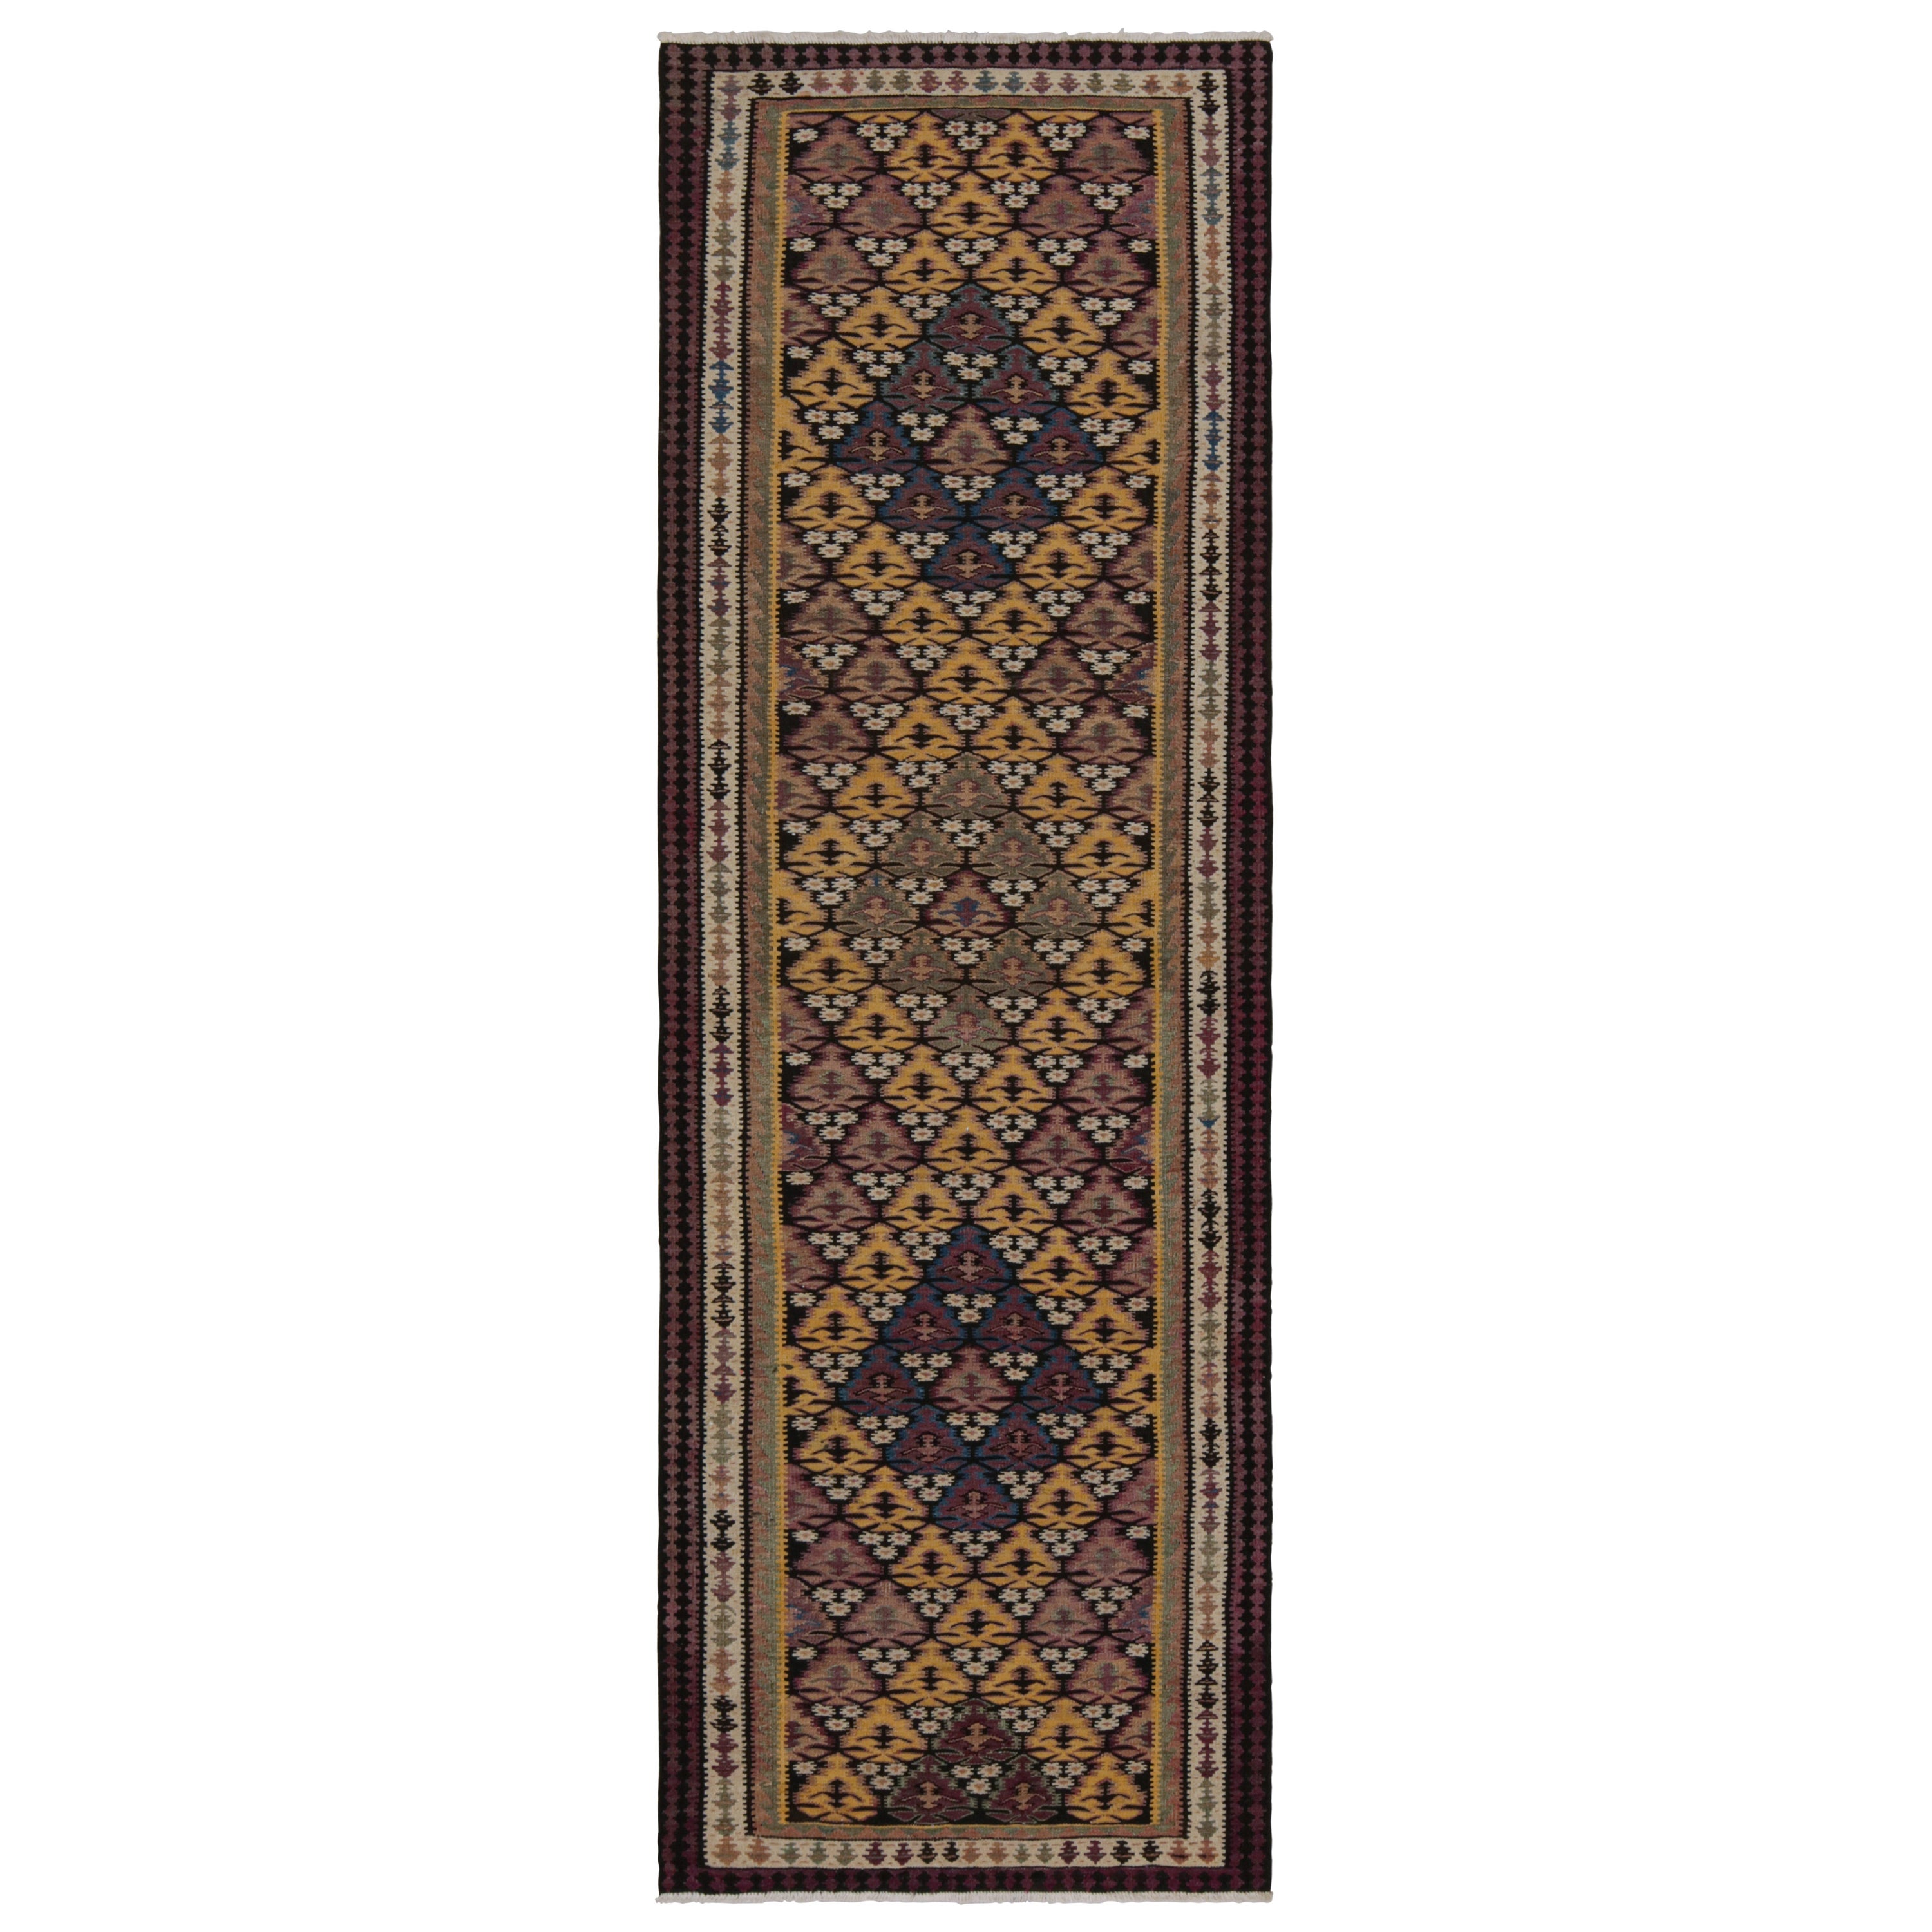 Vintage Persian Kilim in Polychromatic Geometric Patterns, from Rug & Kilim